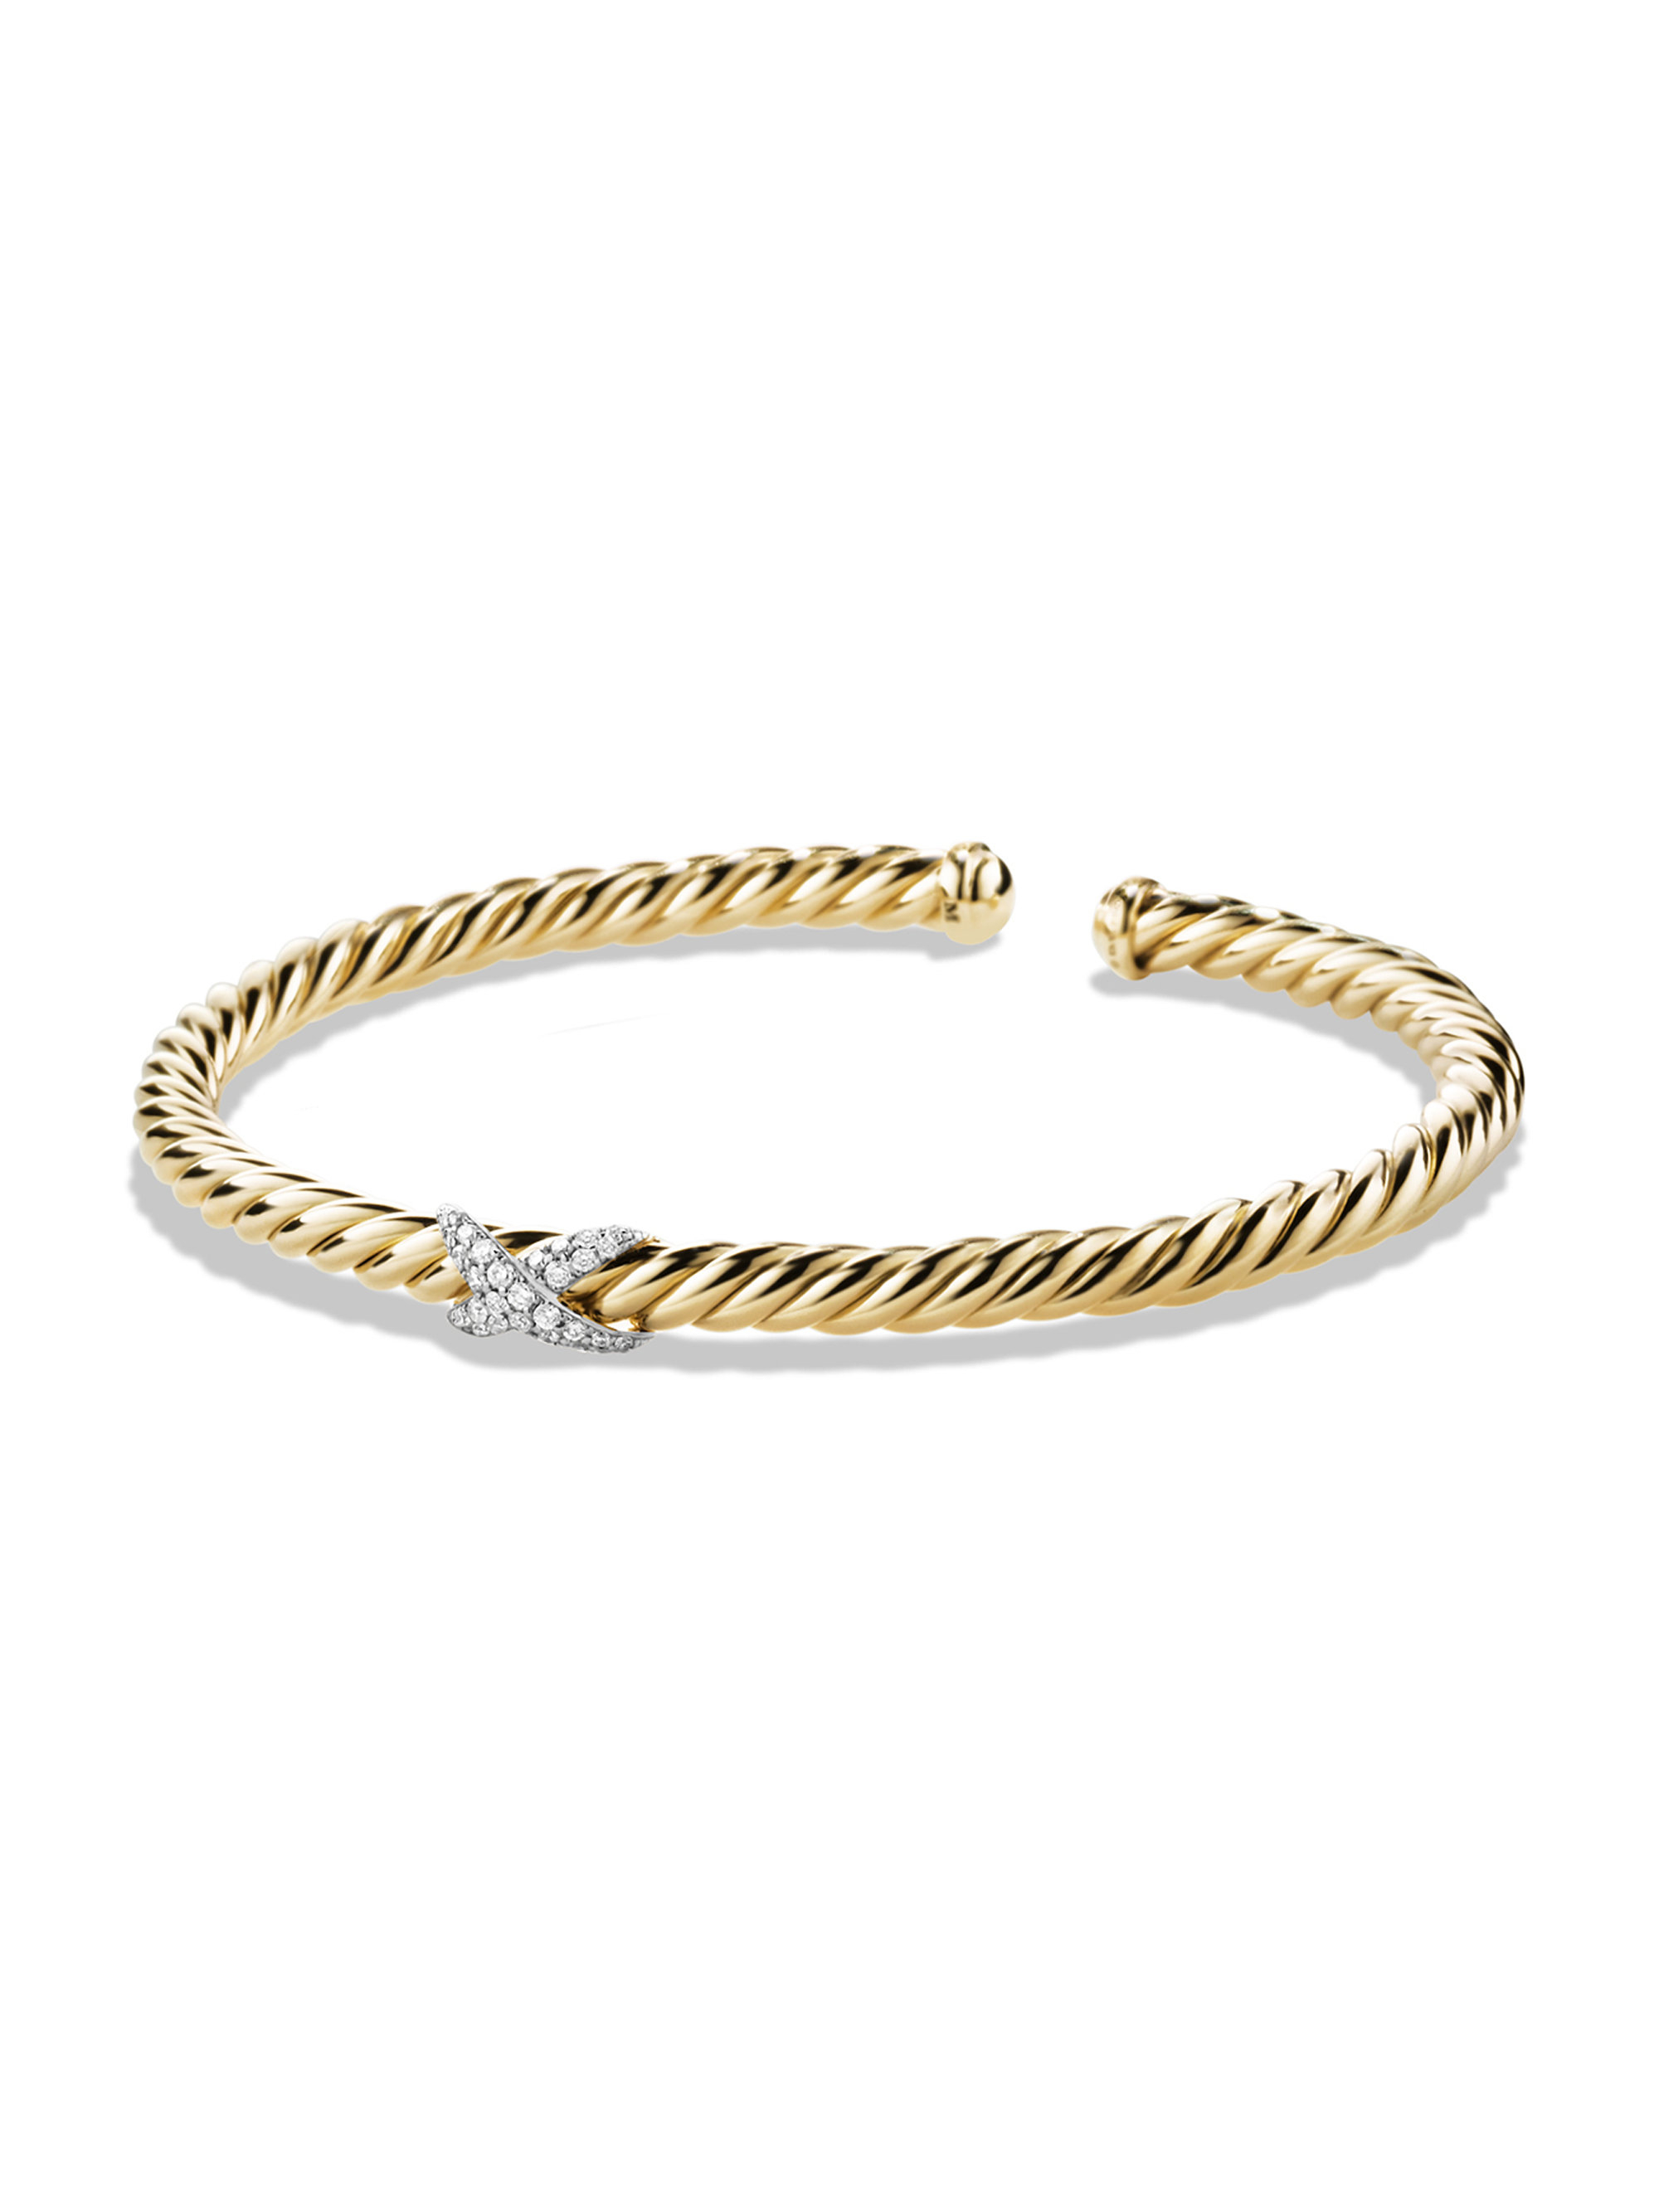 Lyst - David yurman X Bracelet With Diamonds In 18k Gold in Metallic ...